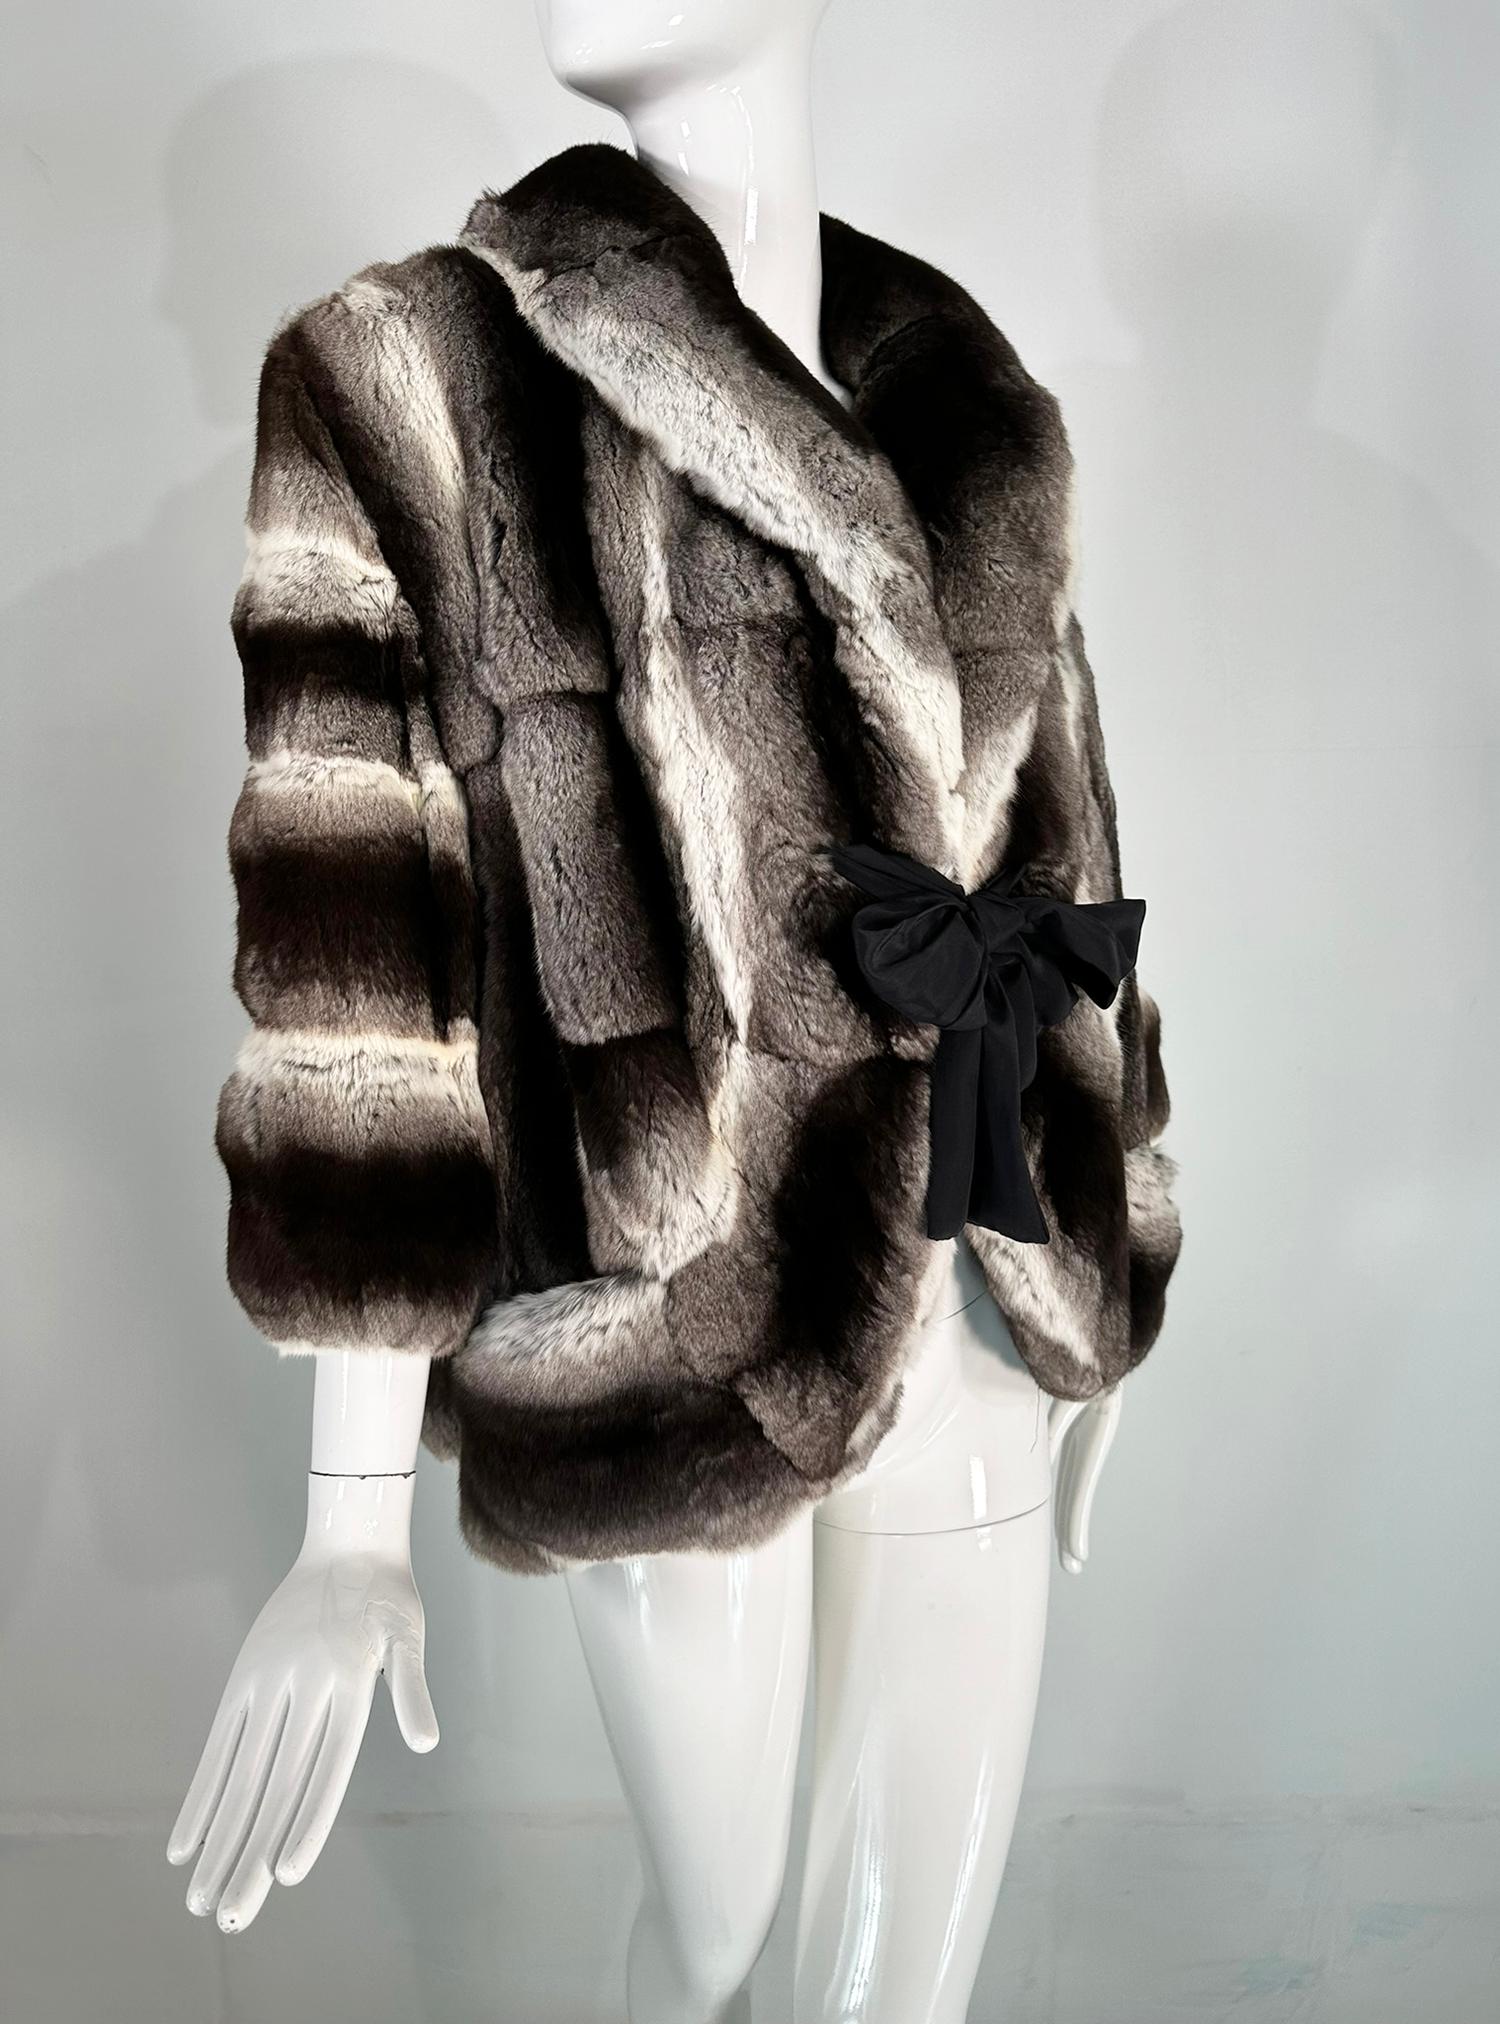 Dennis Basso Chinchilla Fur Jacket in Light & Dark Grey with Cream 2013 S-M 2013 For Sale 7